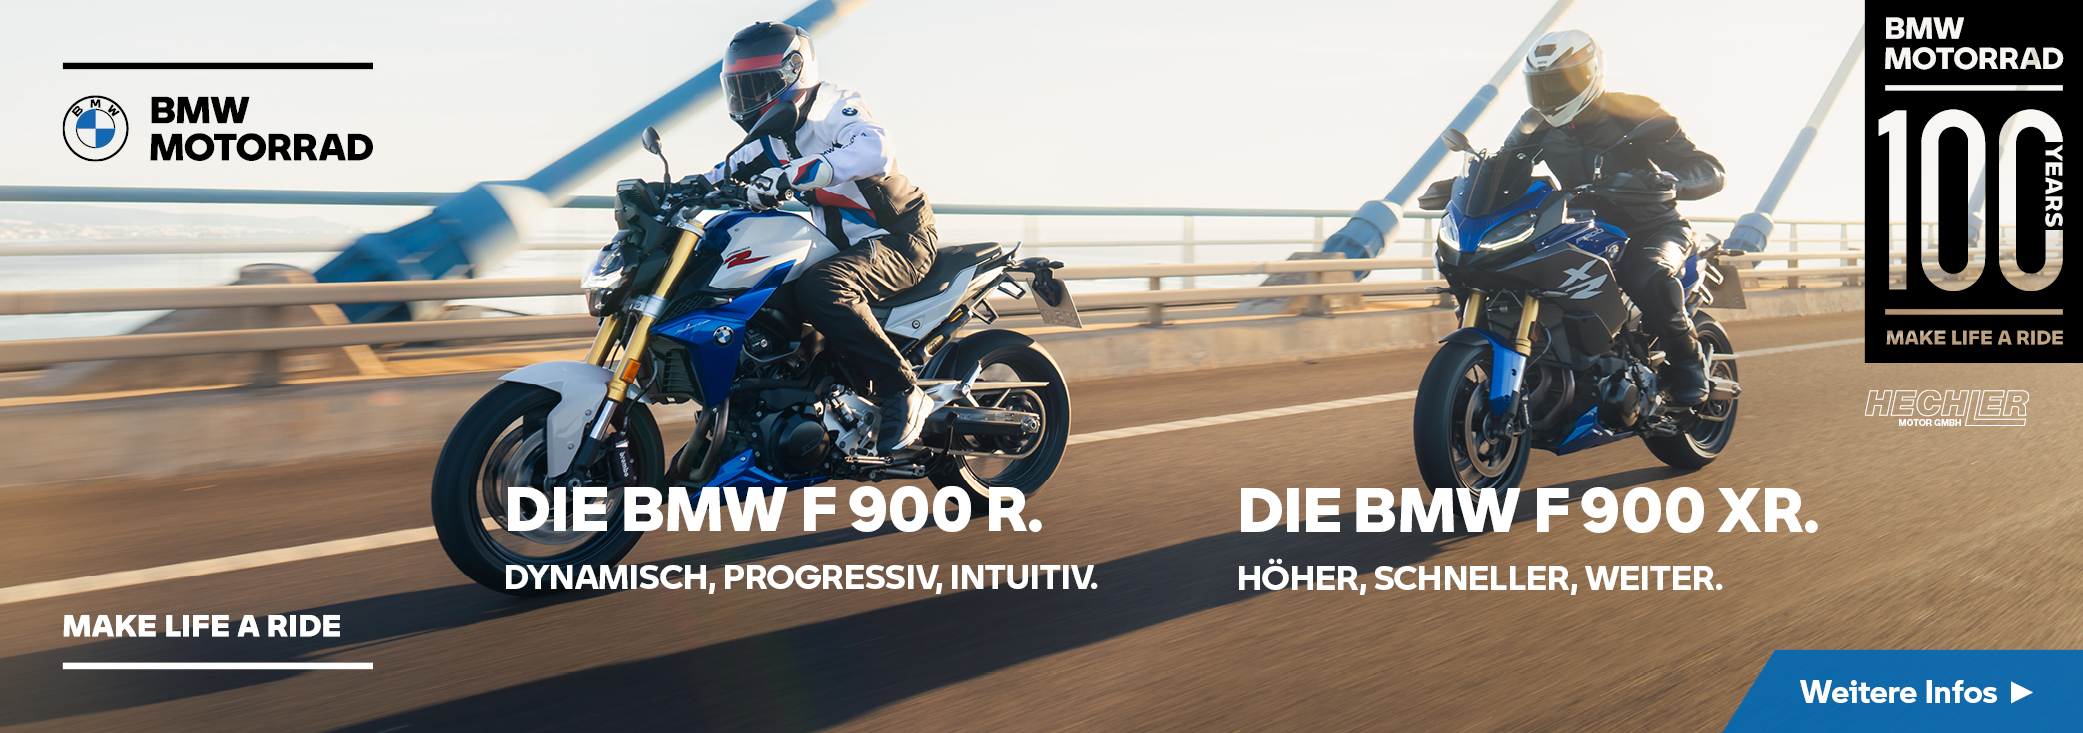 Hechler-Motor - BMW F 900 R und BMW F 900 XR